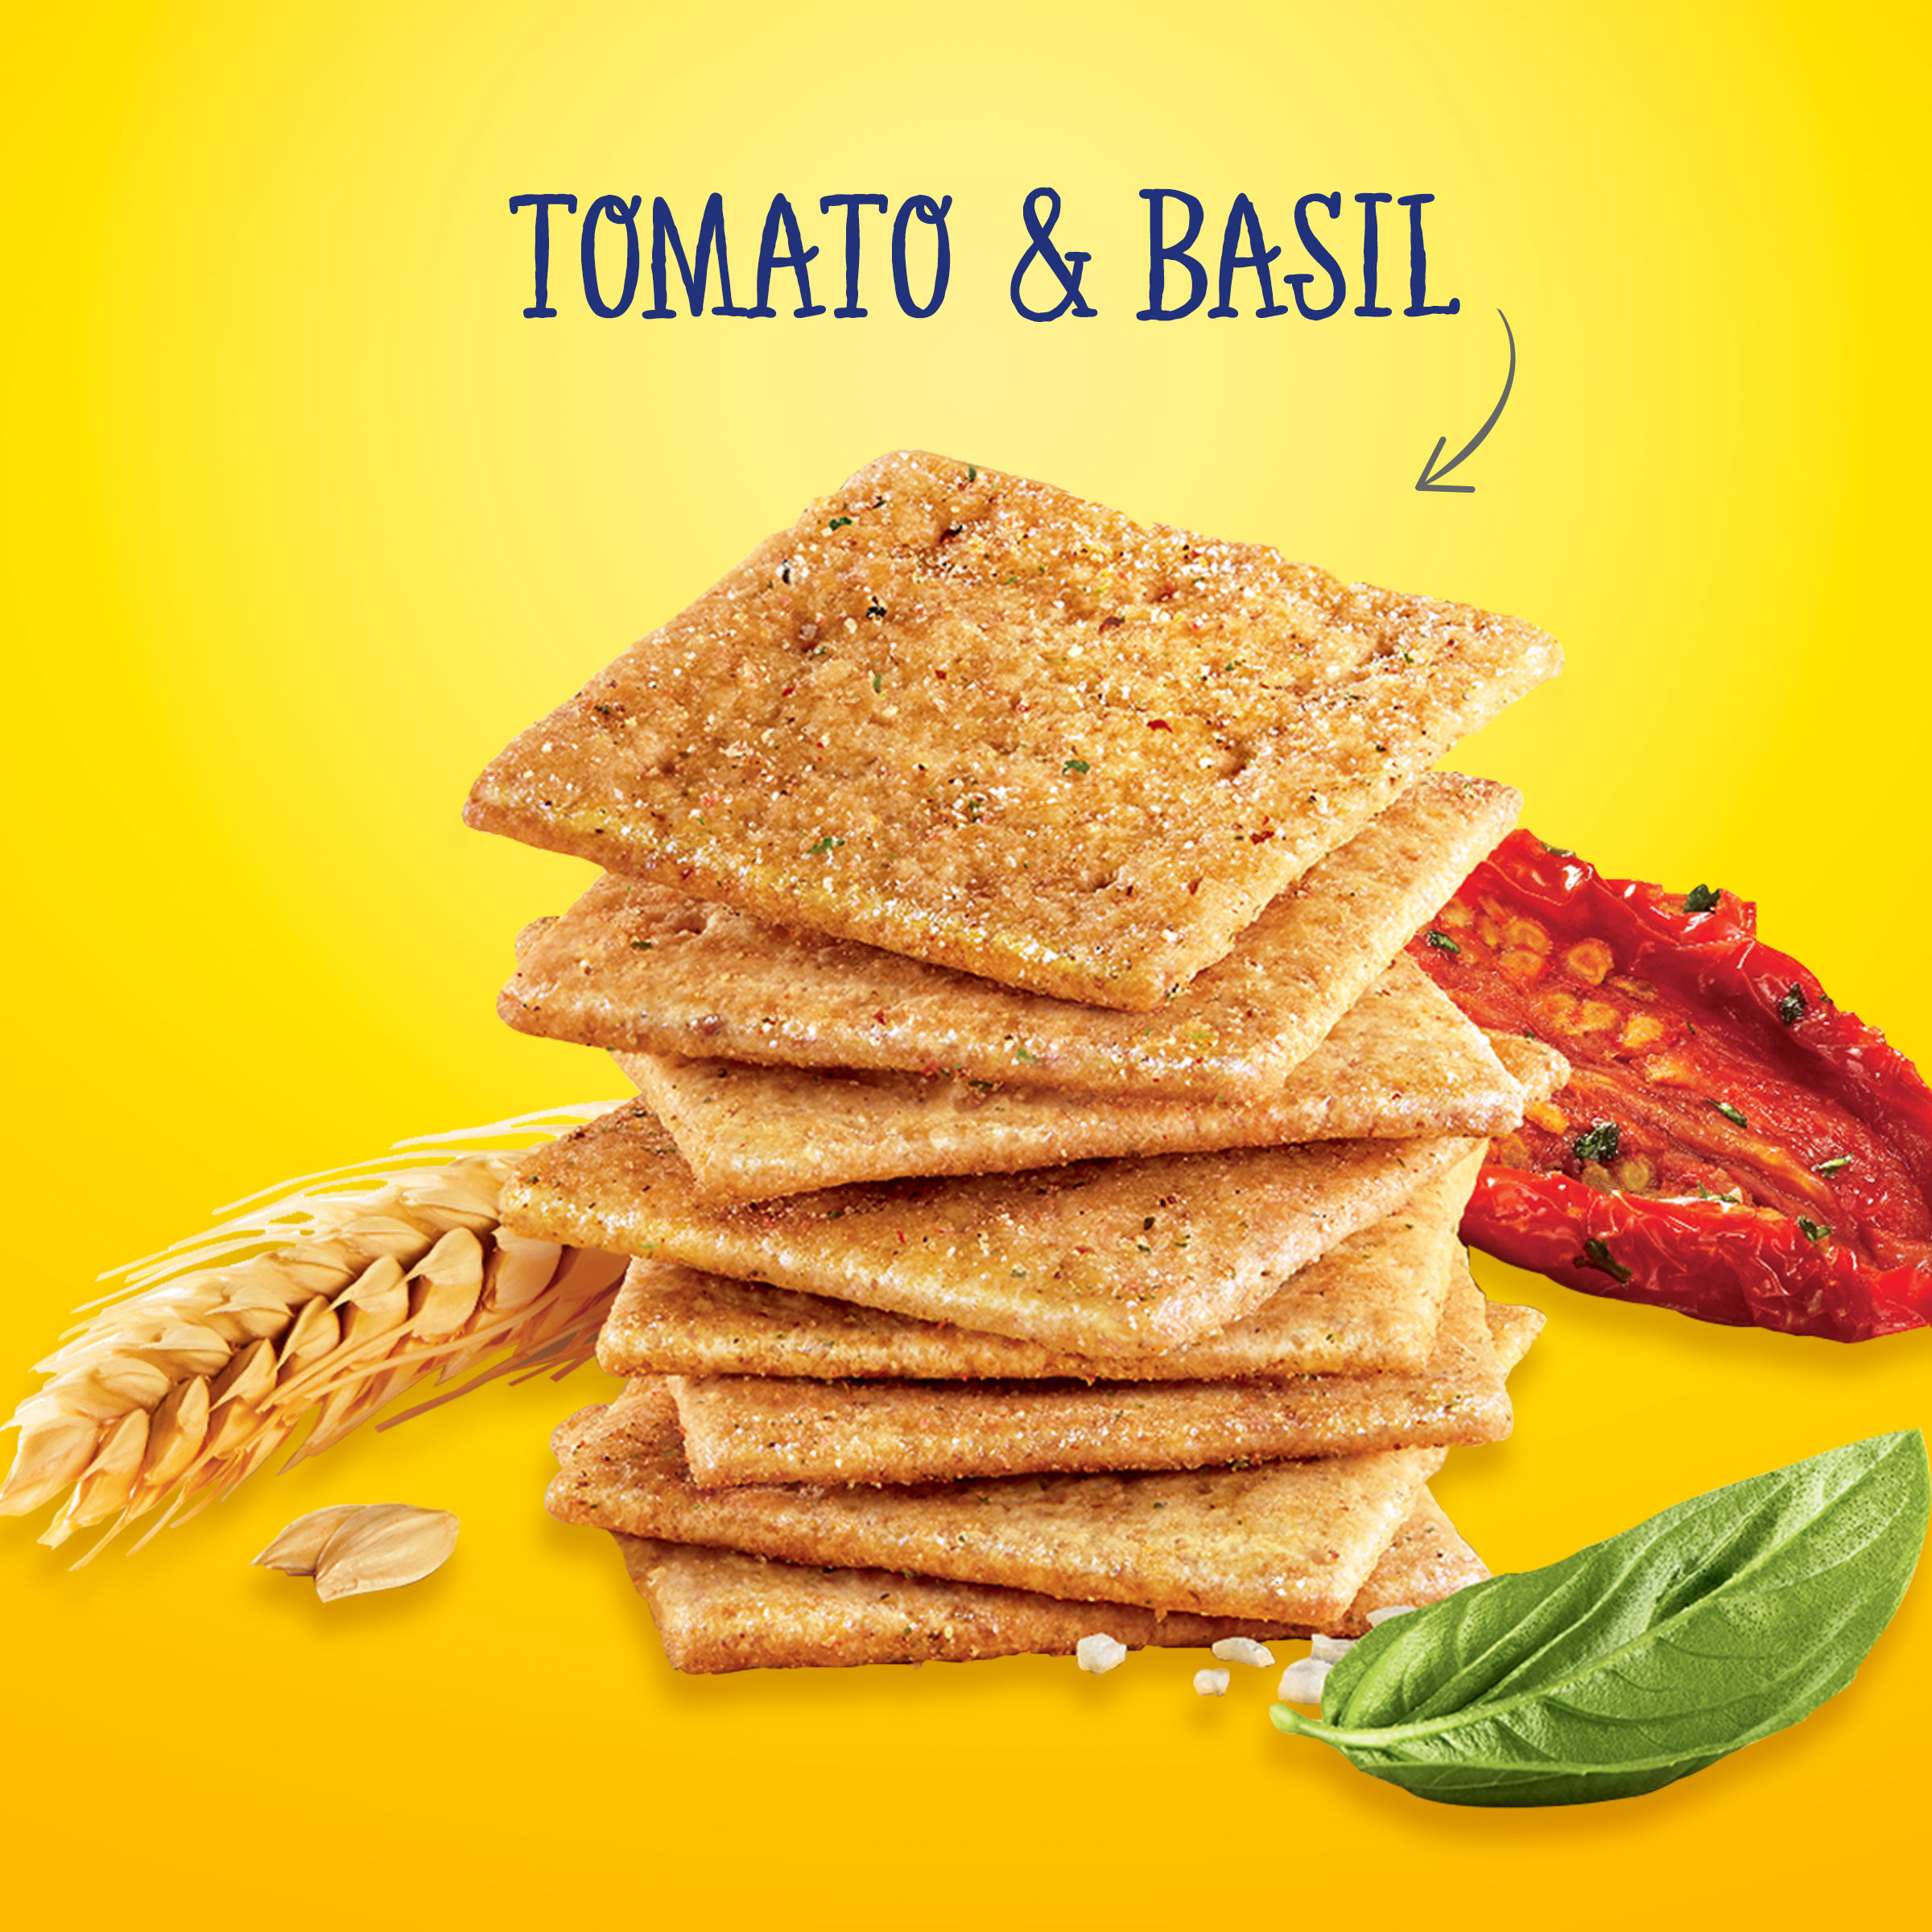 Nabisco Wheat Thins Sundried Tomato & Basil Whole Grain Wheat Crackers, 9 oz - image 3 of 12